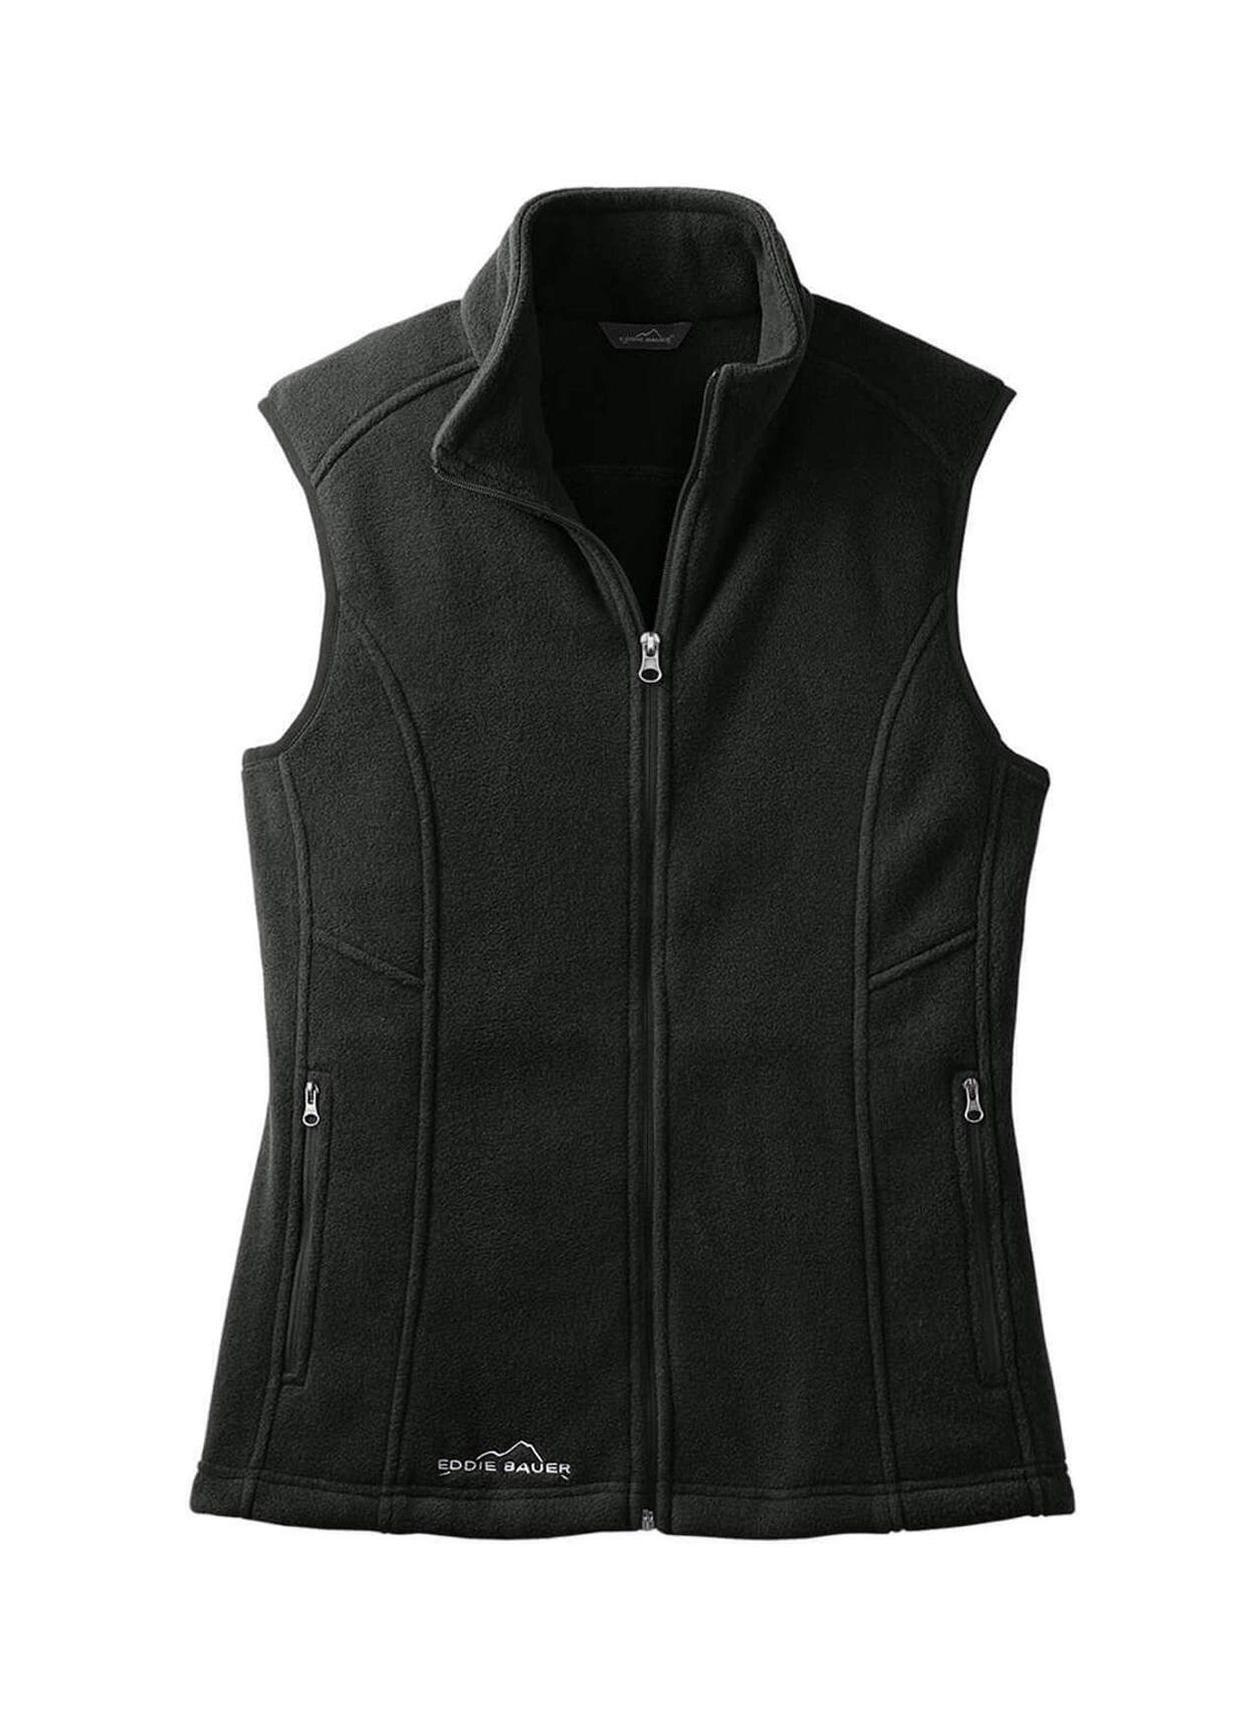 Eddie Bauer Women's Black Fleece Vest